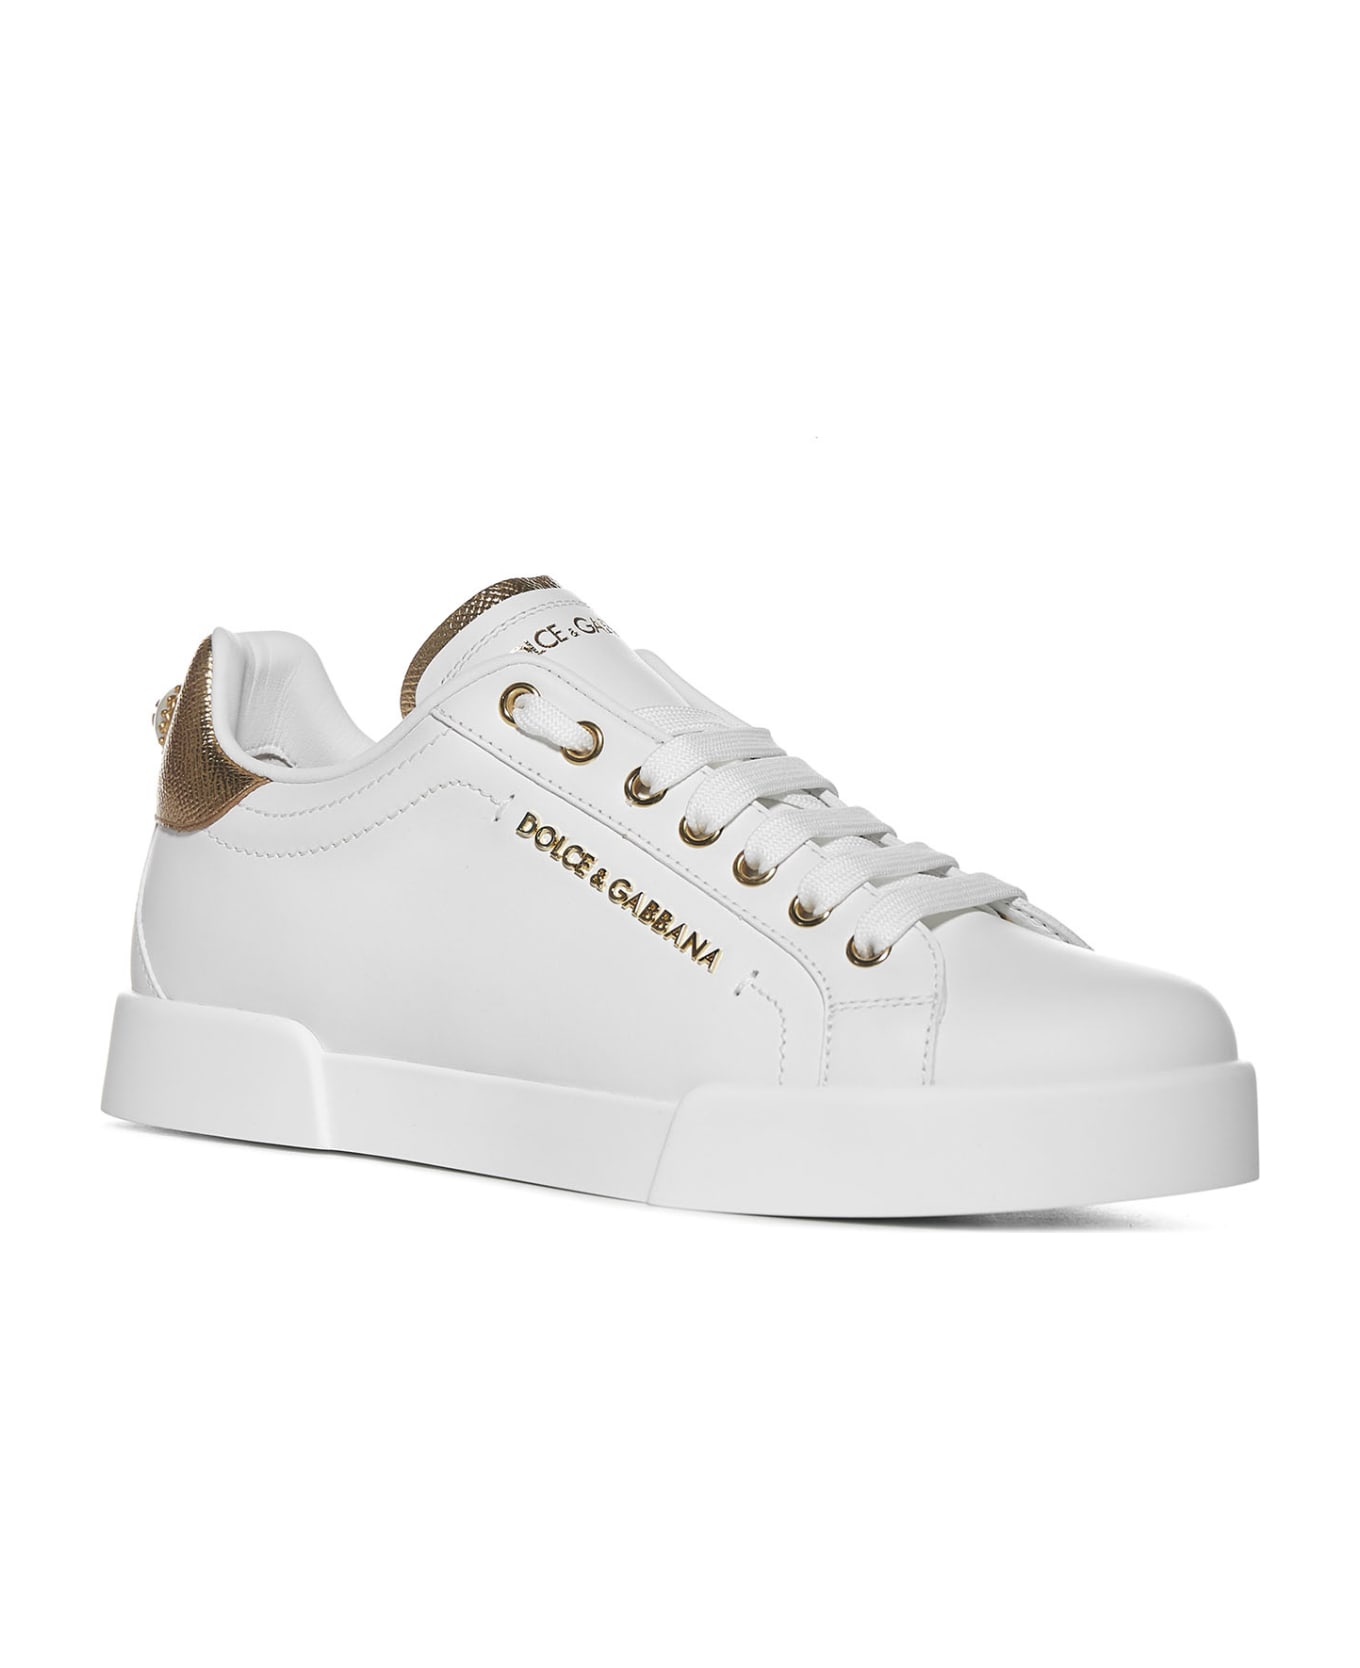 Dolce & Gabbana Sneakers - Bianco oro